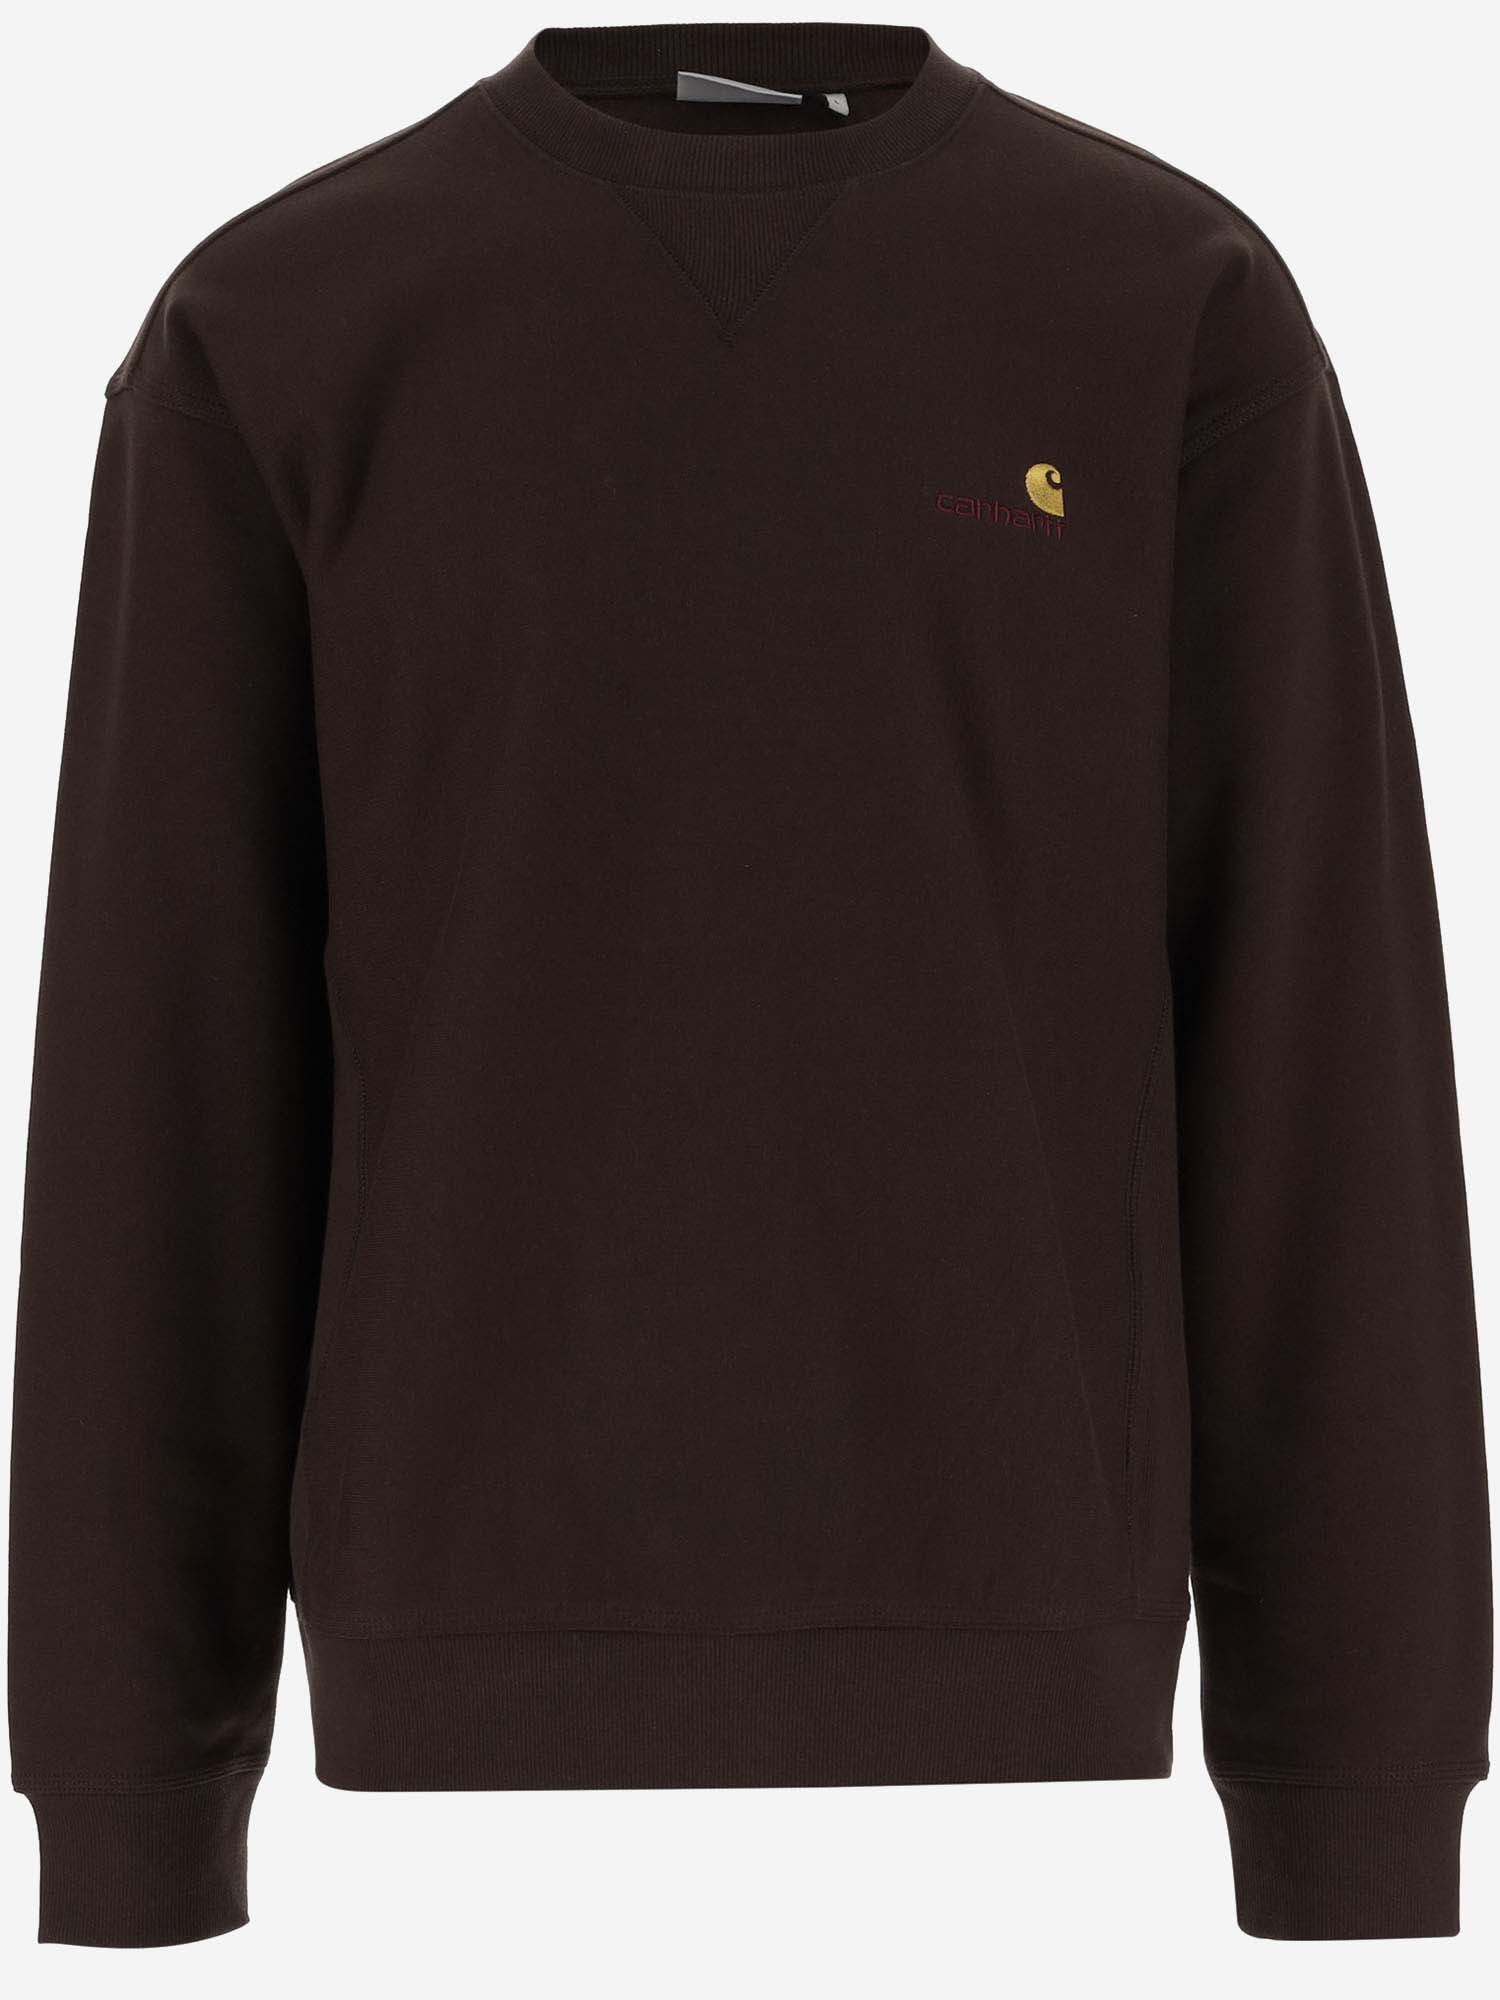 Carhartt Cotton Blend Sweatshirt With Logo In Tobacco